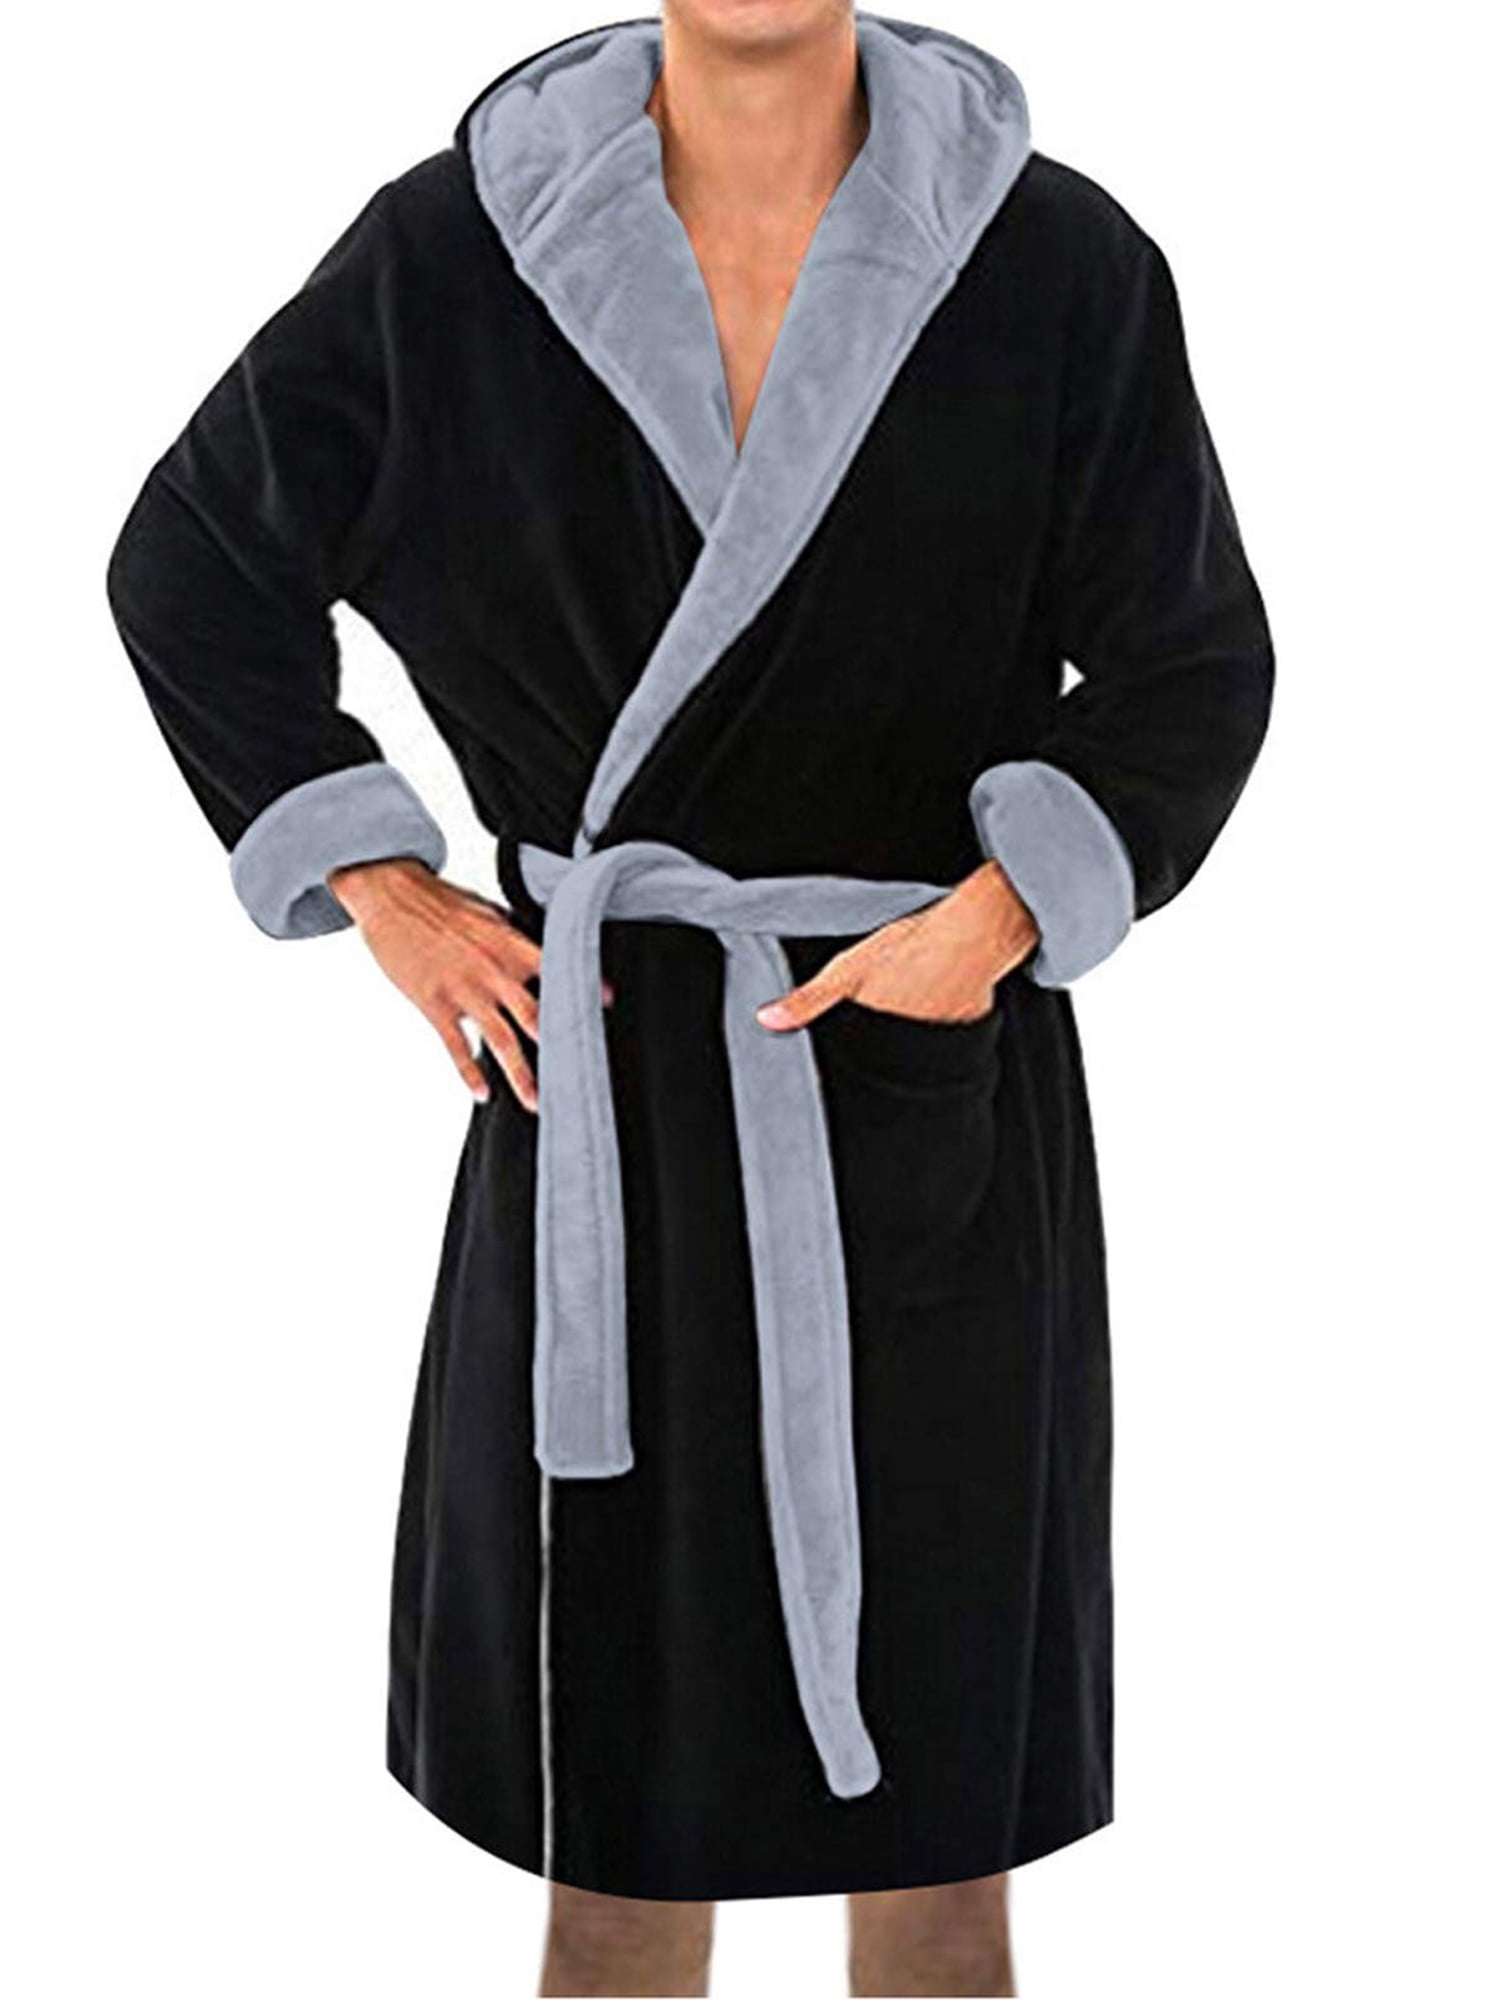 Grianlook Mens Dressing Gown Solid Color Wrap Robe Long Sleeve Bath Robes  Men Soft Nightwear Warm Hooded Towelling Black Gray M - Walmart.com